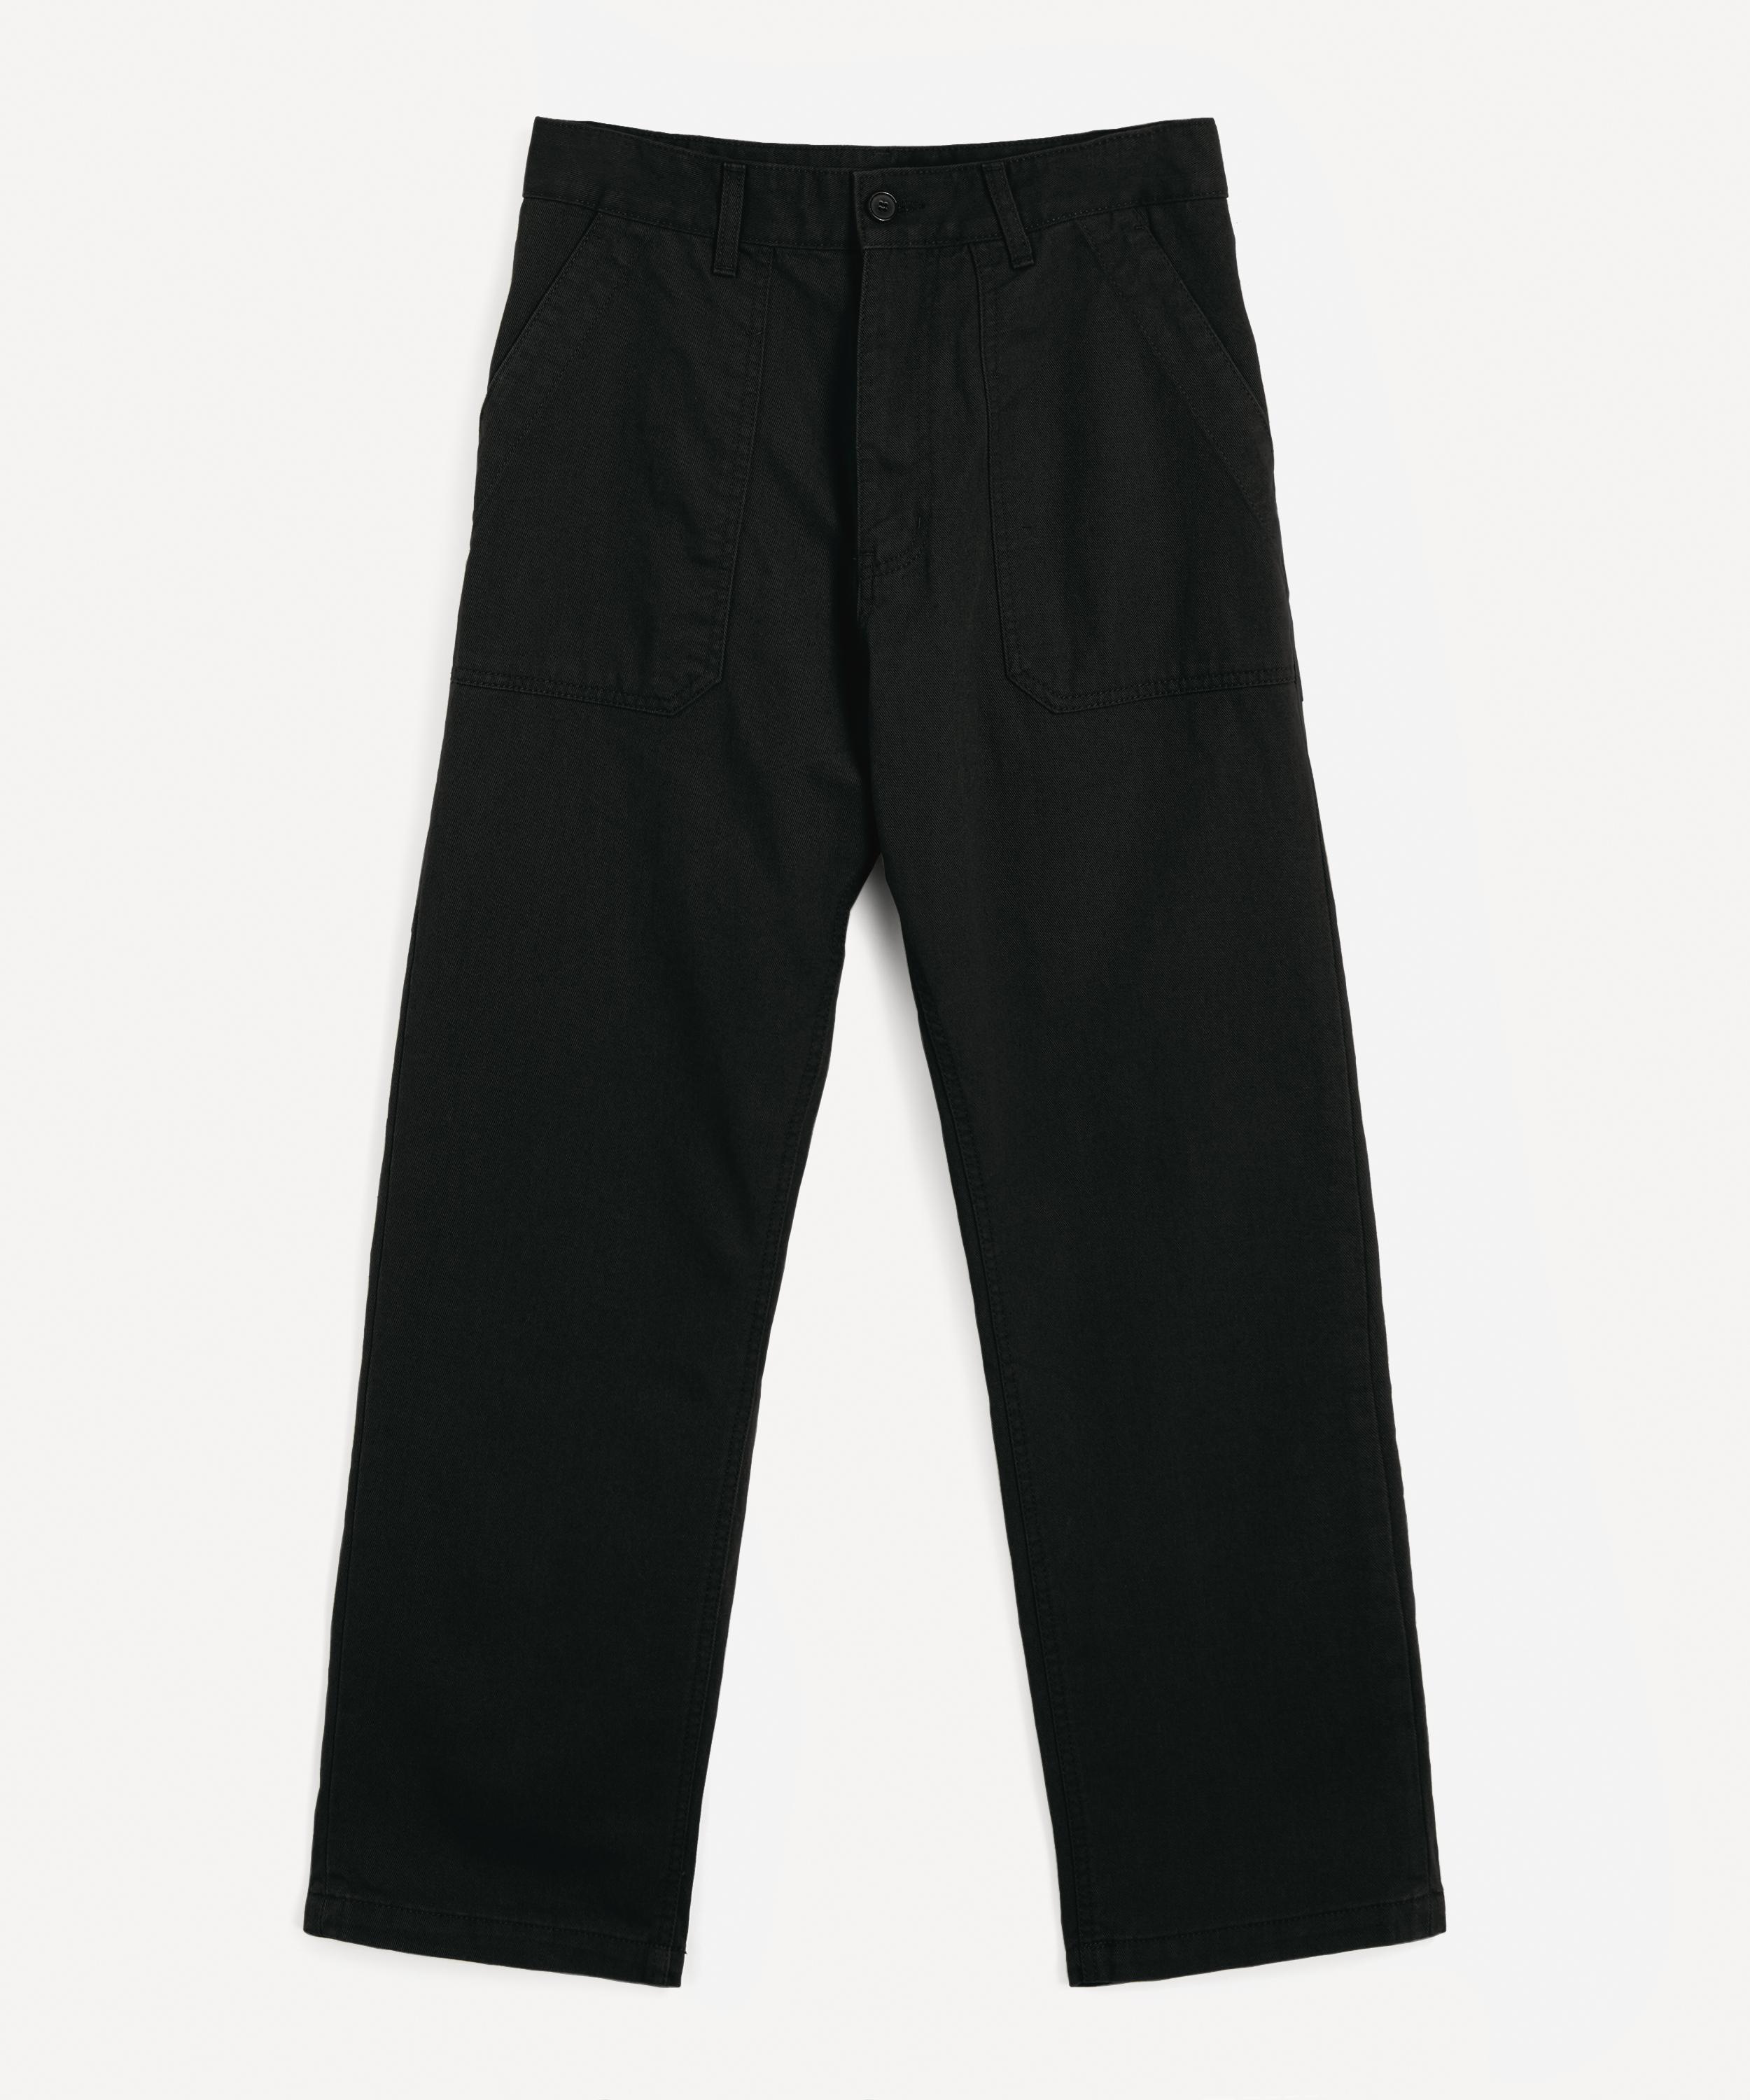 Regular Fit Cotton Fatigue Pants Black, Uniform Bridge